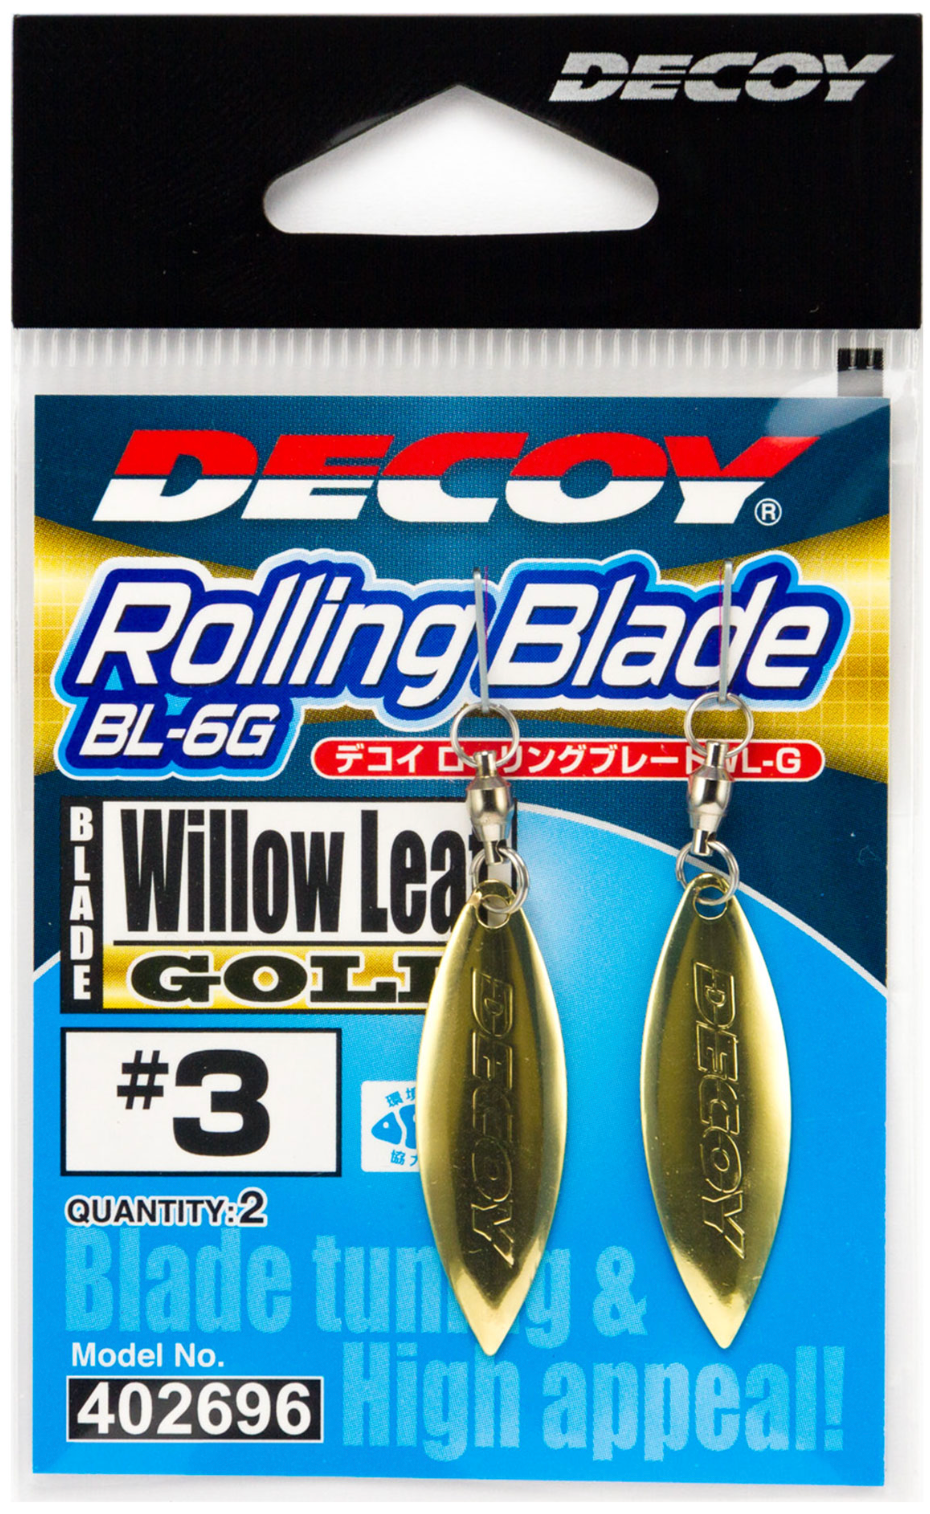 Decoy BL-6G Rolling Blade Saule Or